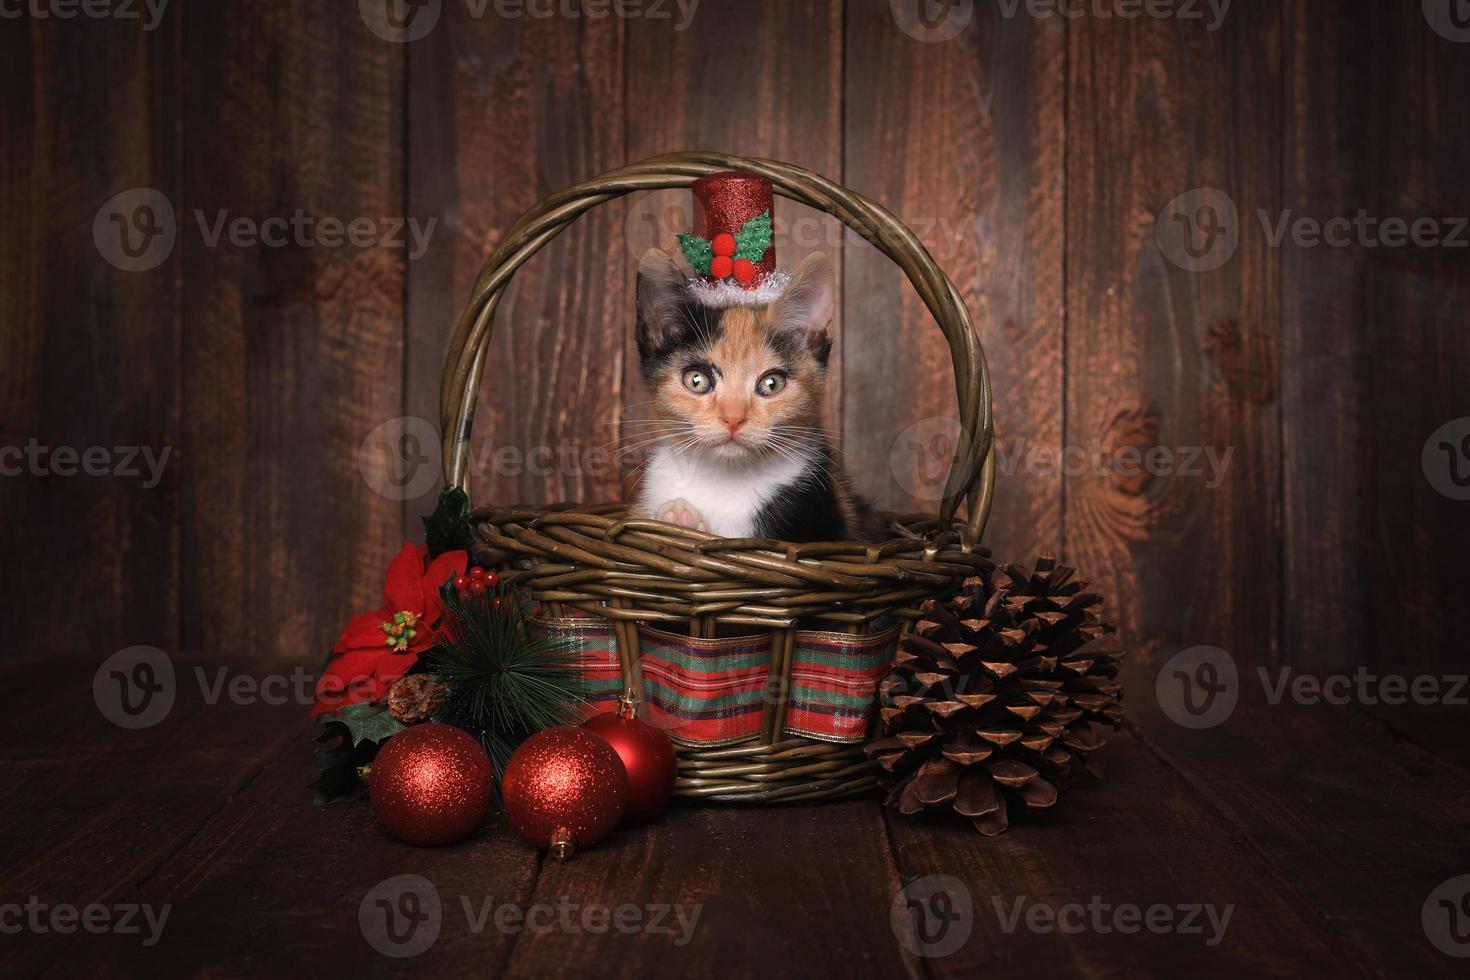 jultema calico kattunge inställd på trä bakgrund foto